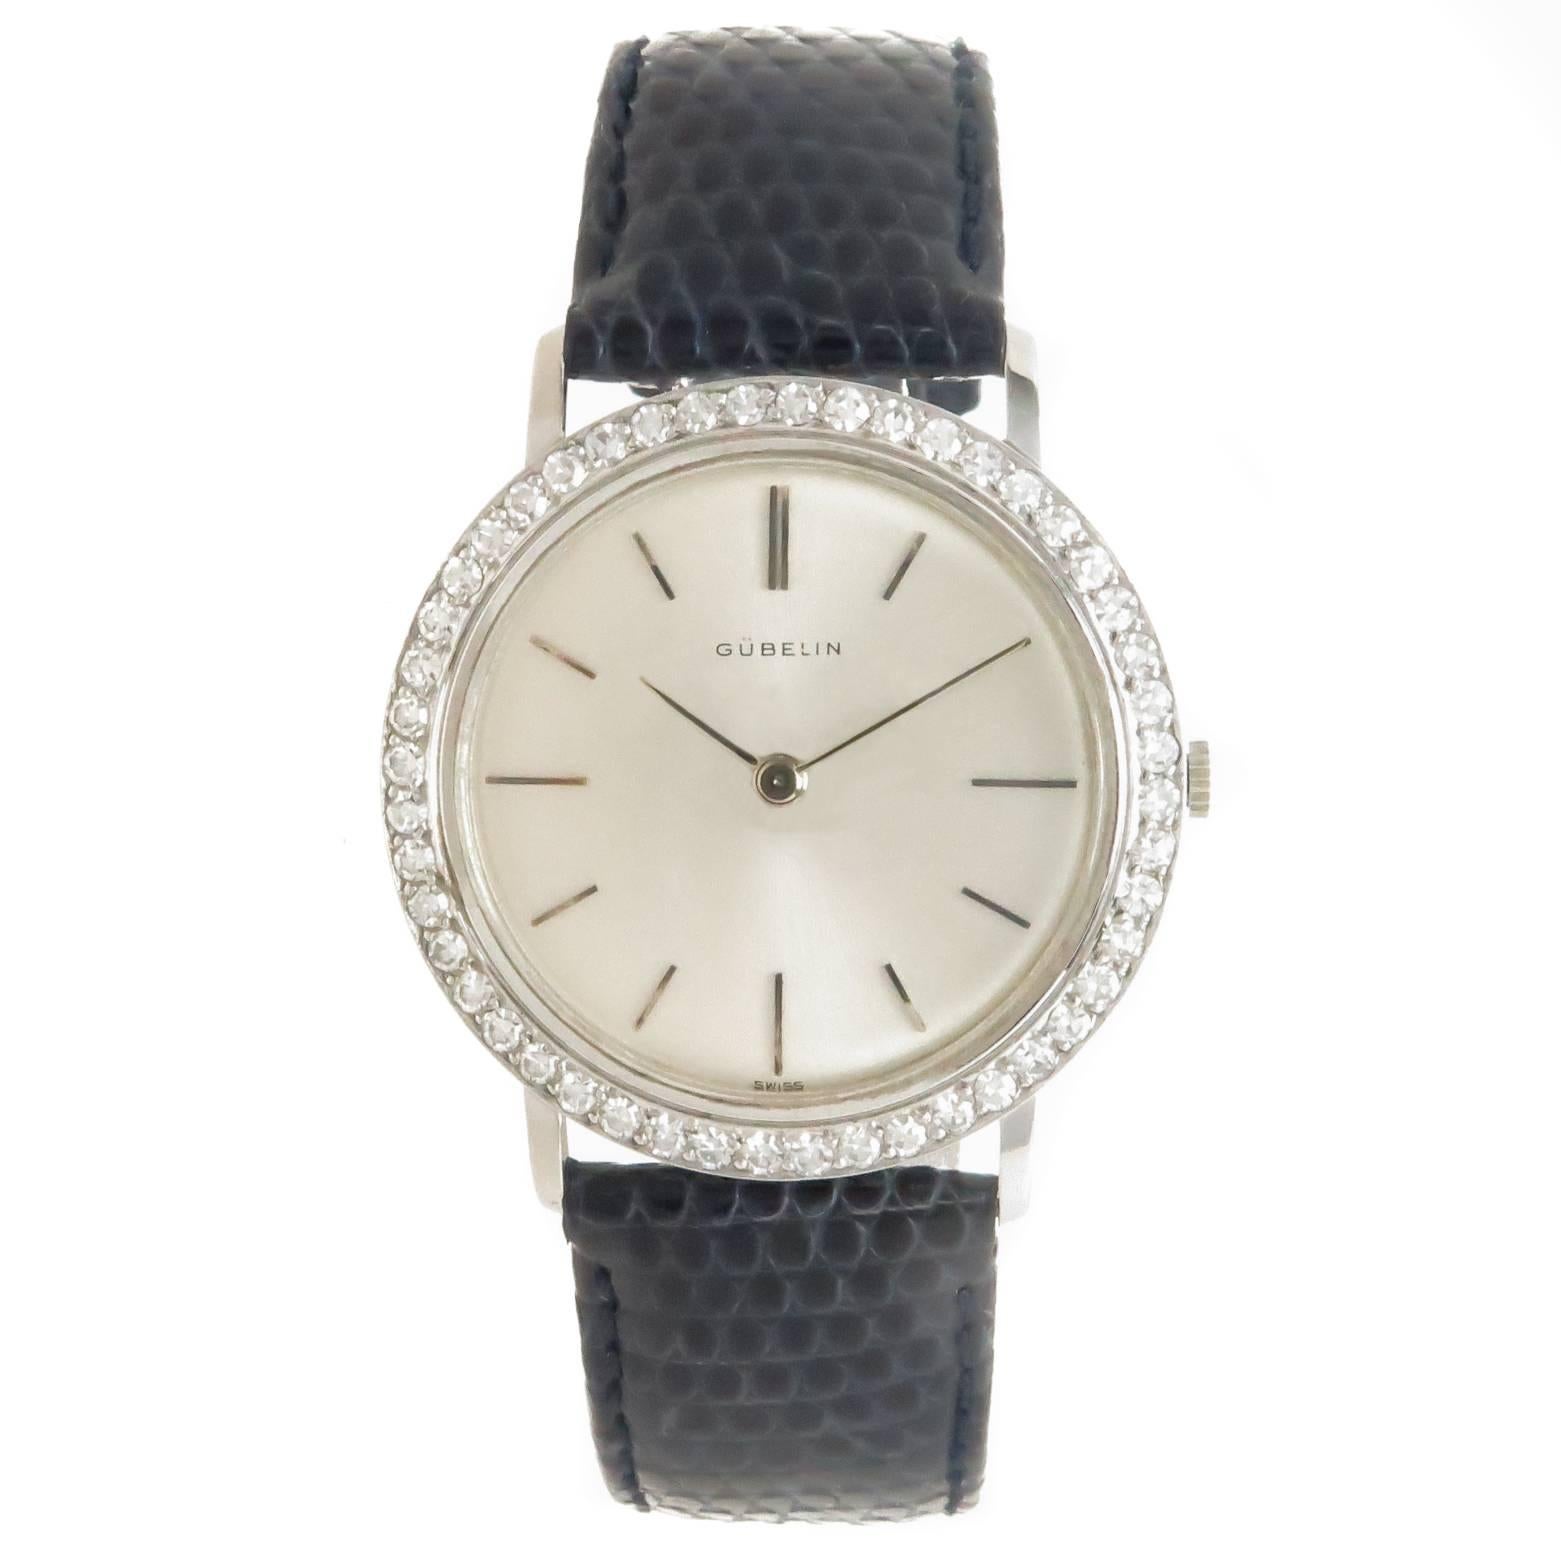 Gubelin Platinum Diamond Mechanical Dress Wristwatch, Circa 1960 